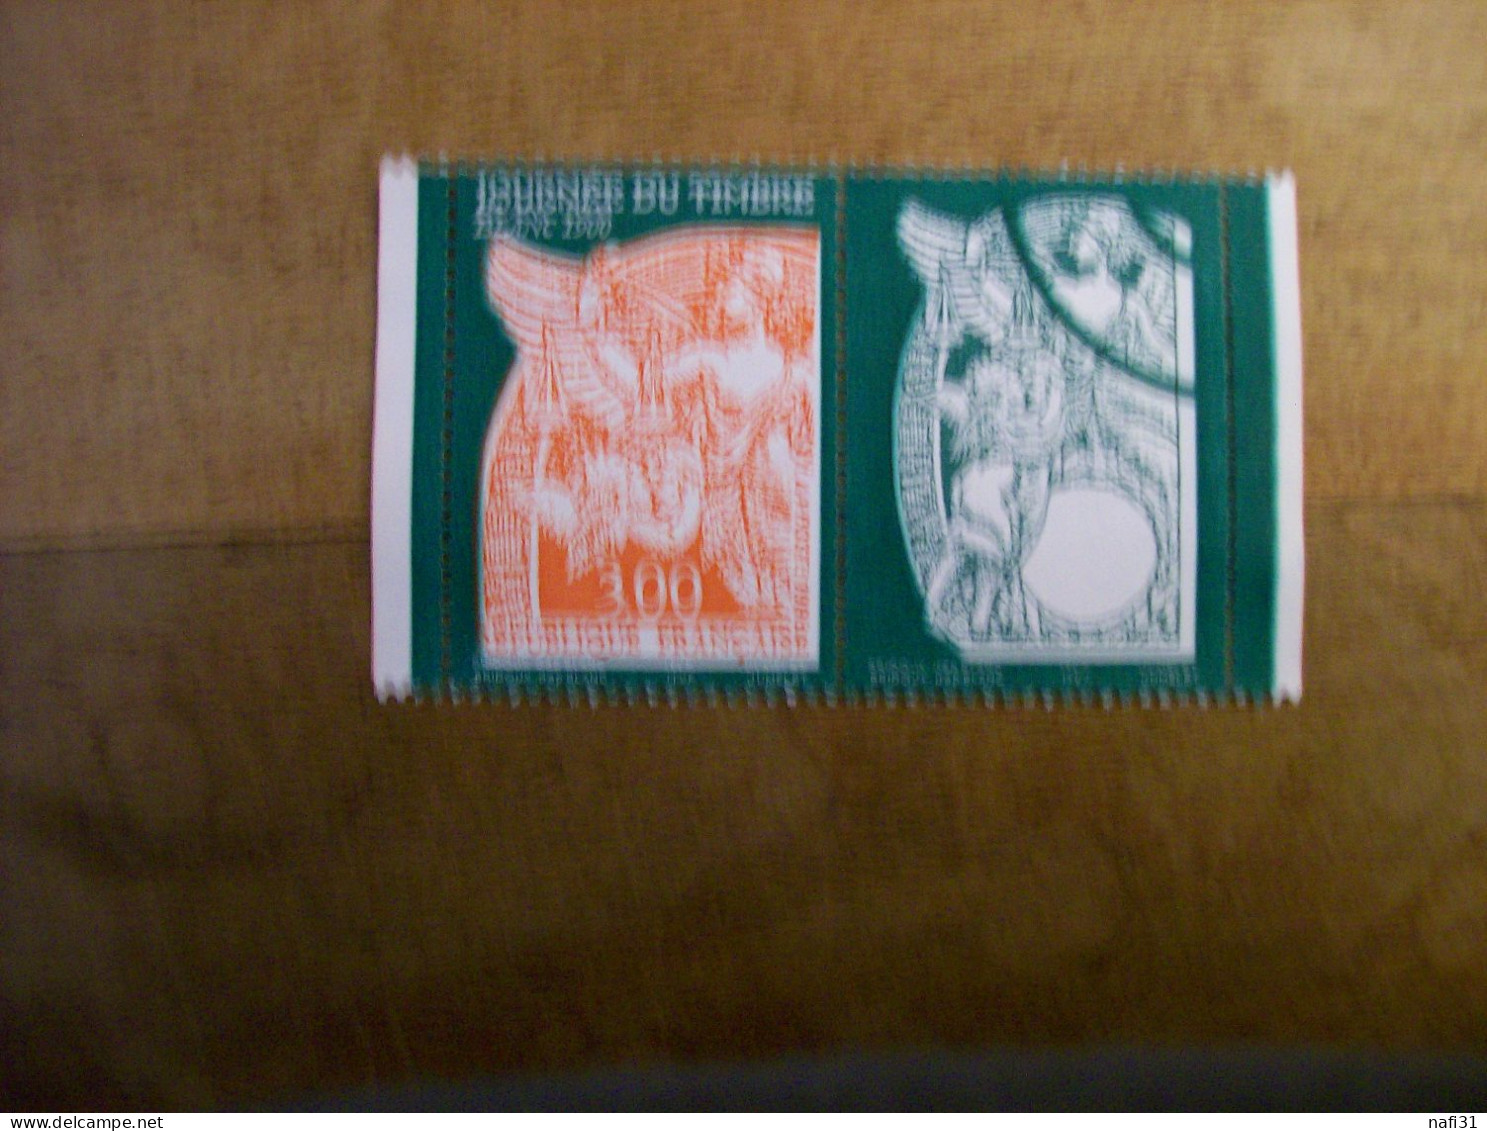 FRANCE Carnet Journnee Du Timbre Annee1998 N 3136 A Ob Cote 3,OO - Dag Van De Postzegel